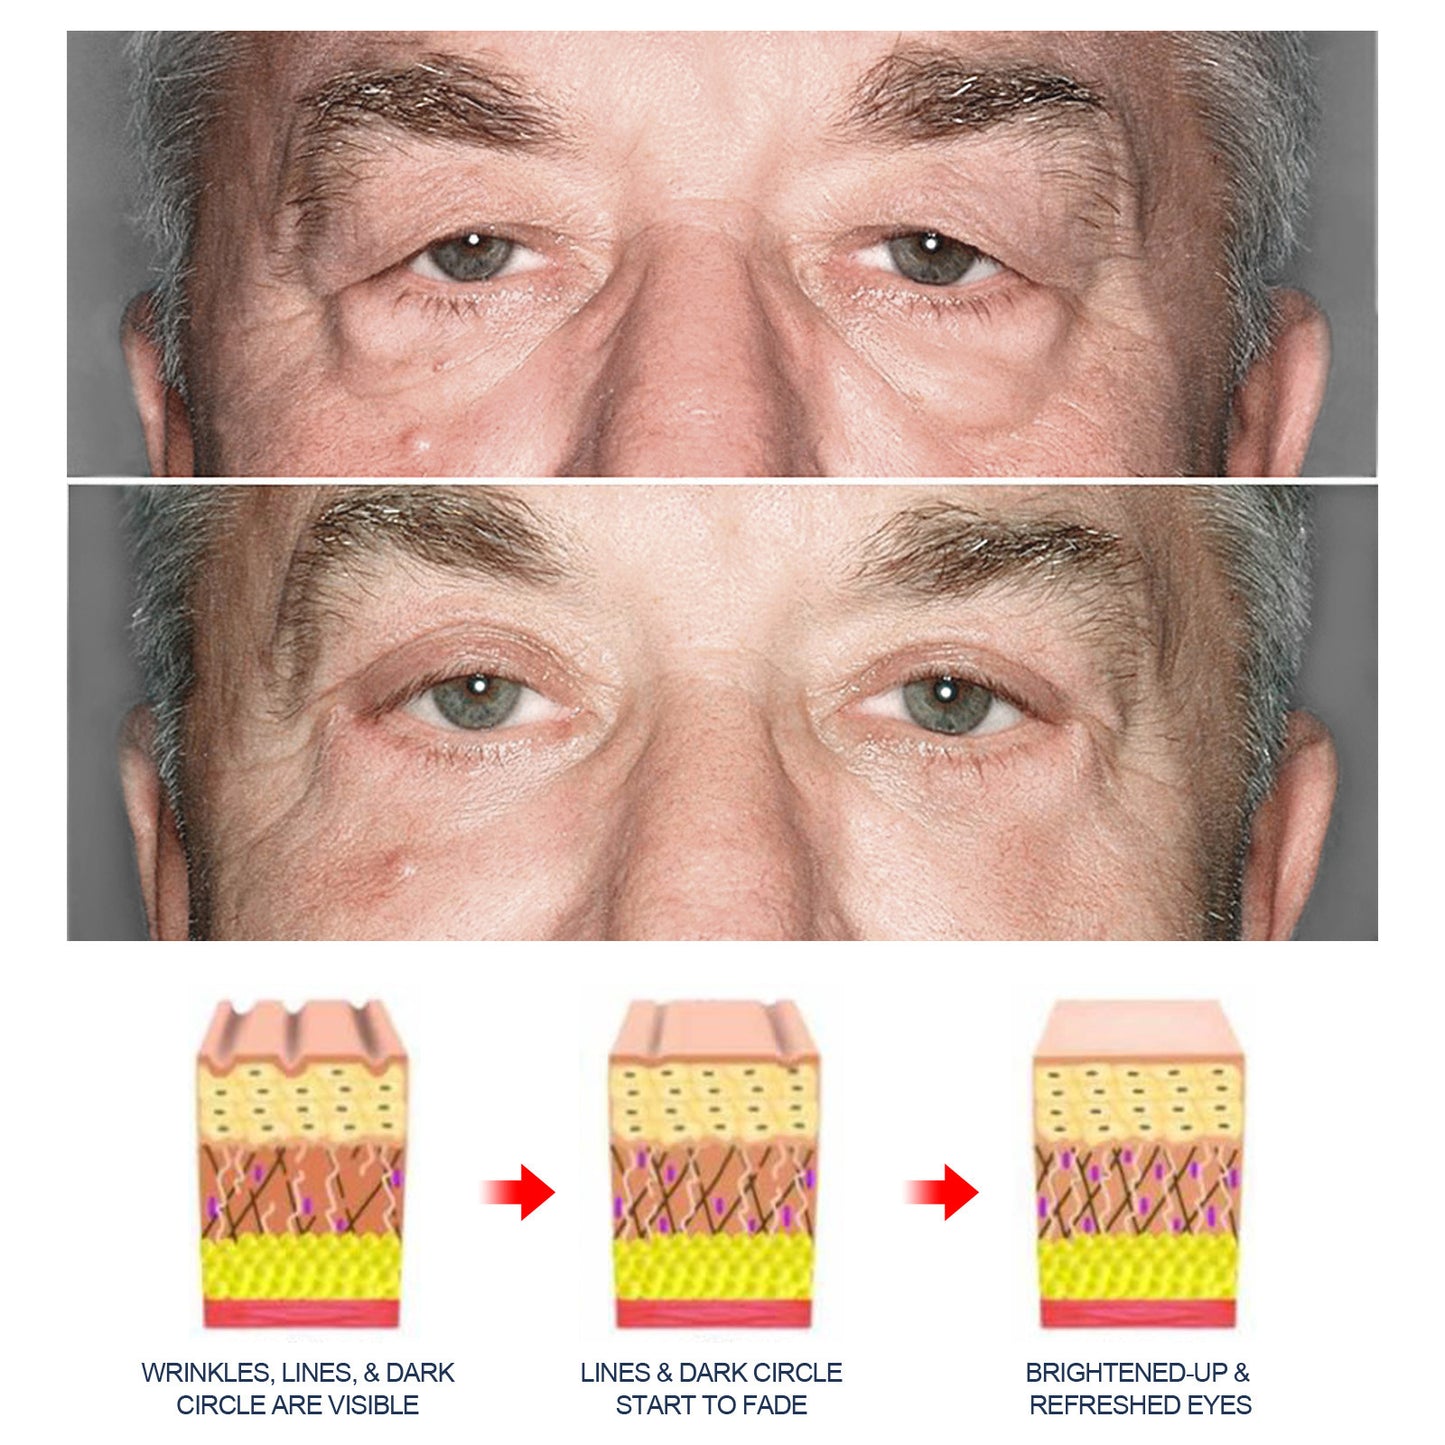 Men's Anti-aging Eye Cream